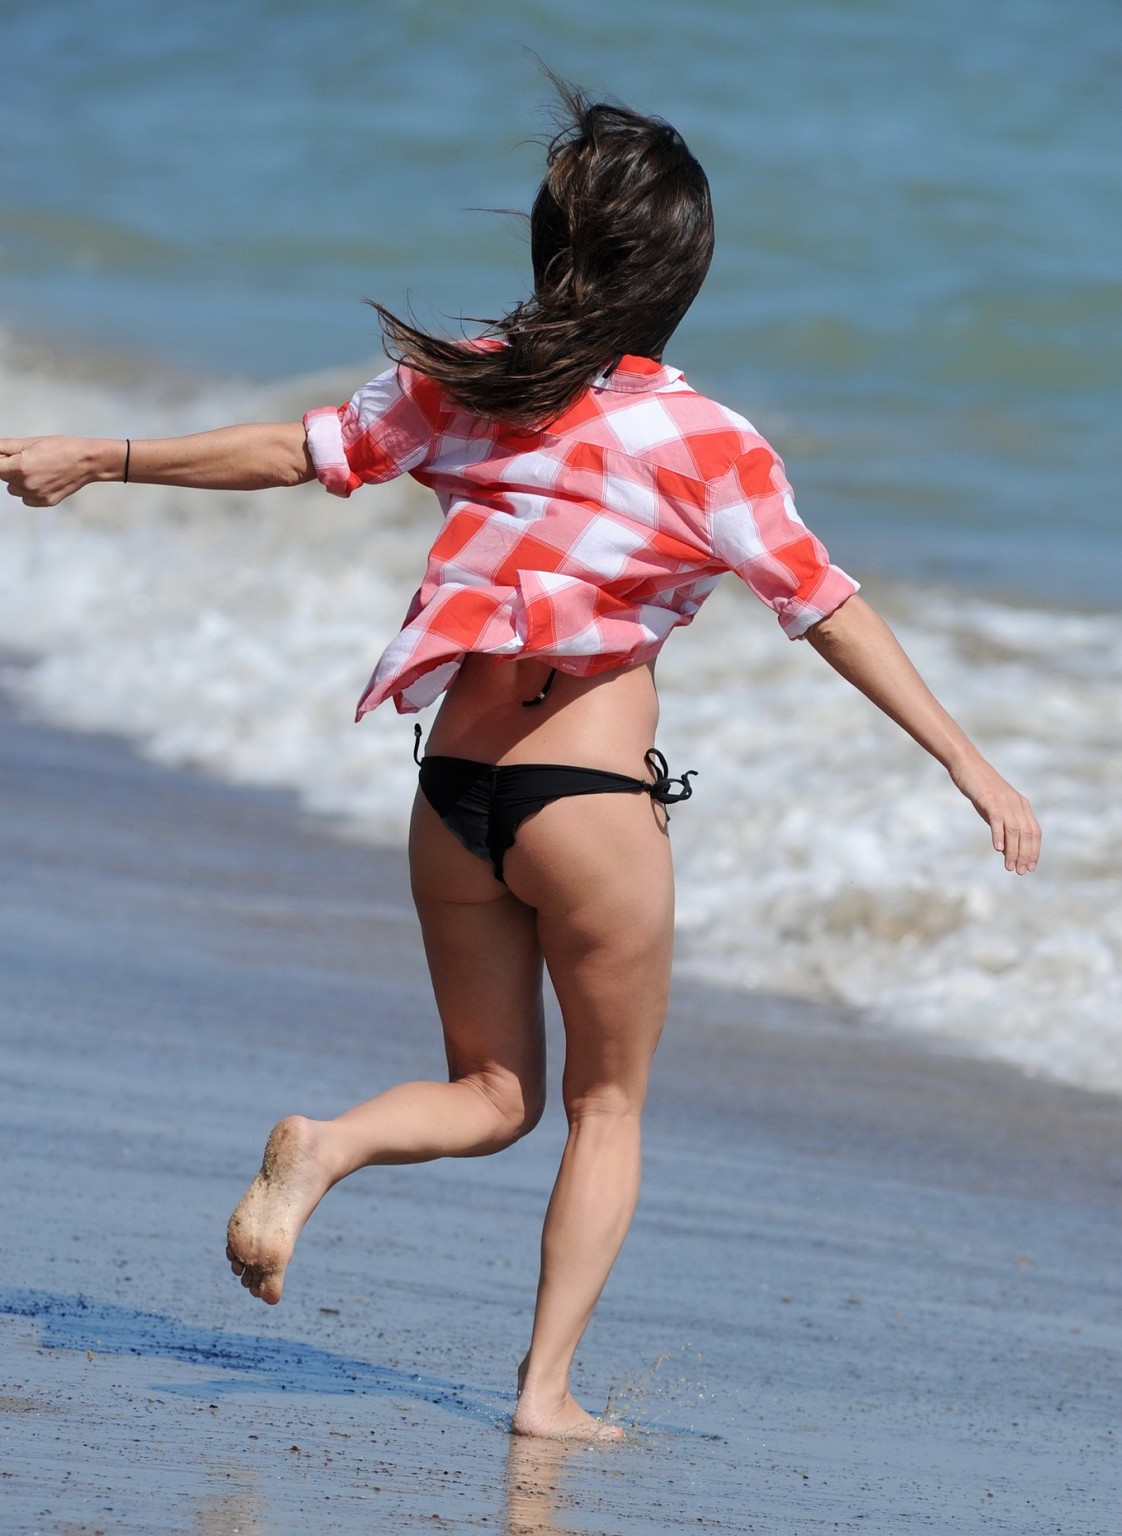 Kelly Monaco wearing skimpy black bikini at Dancing With The Stars beach party #75207495